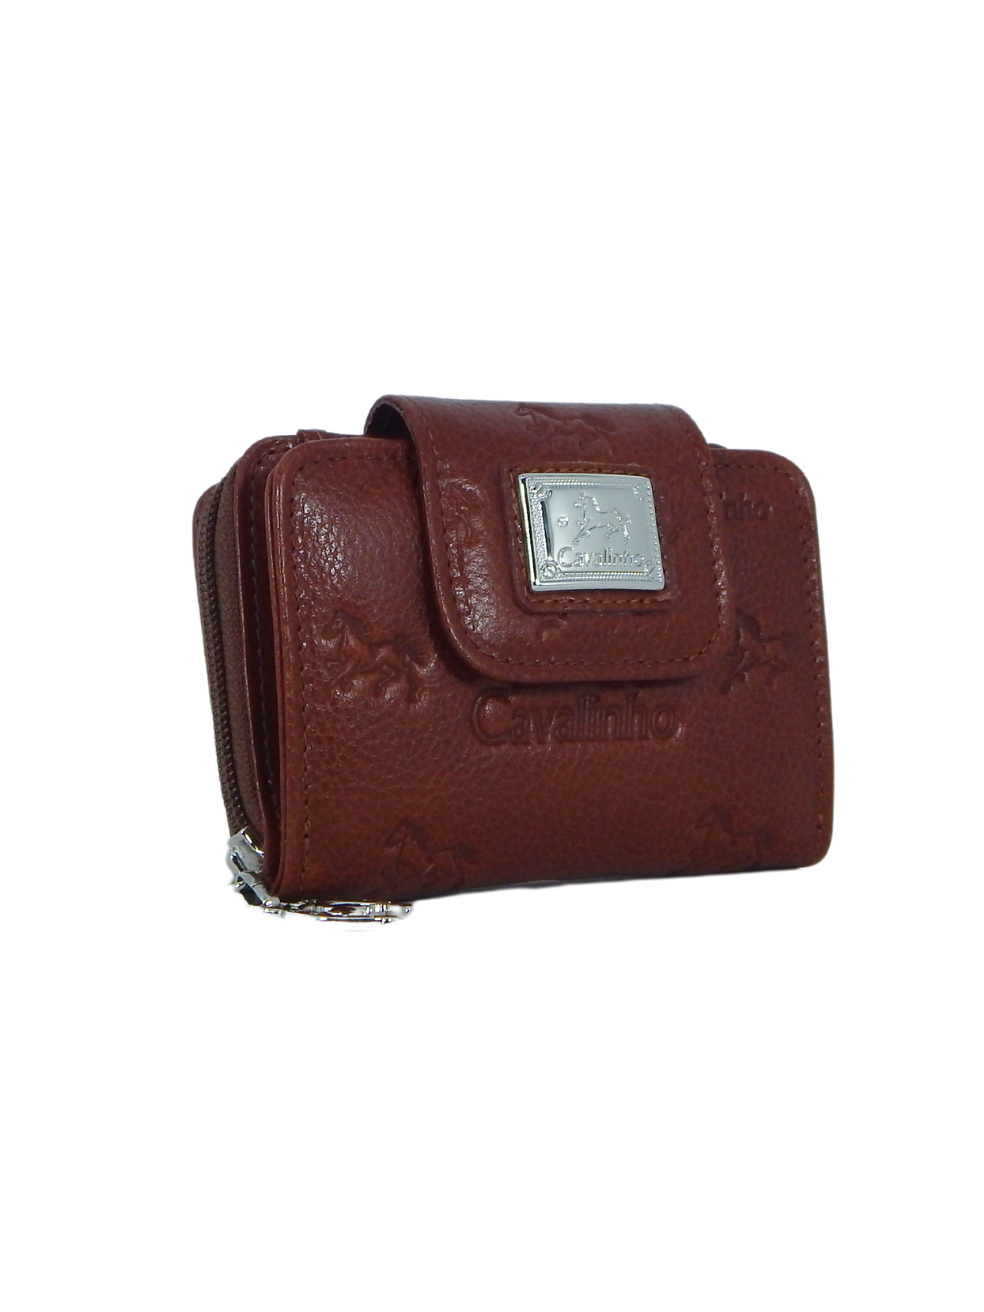 Cavalo Lusitano Leather Wallet SKU 28090218.13 #color_sadddlebrown